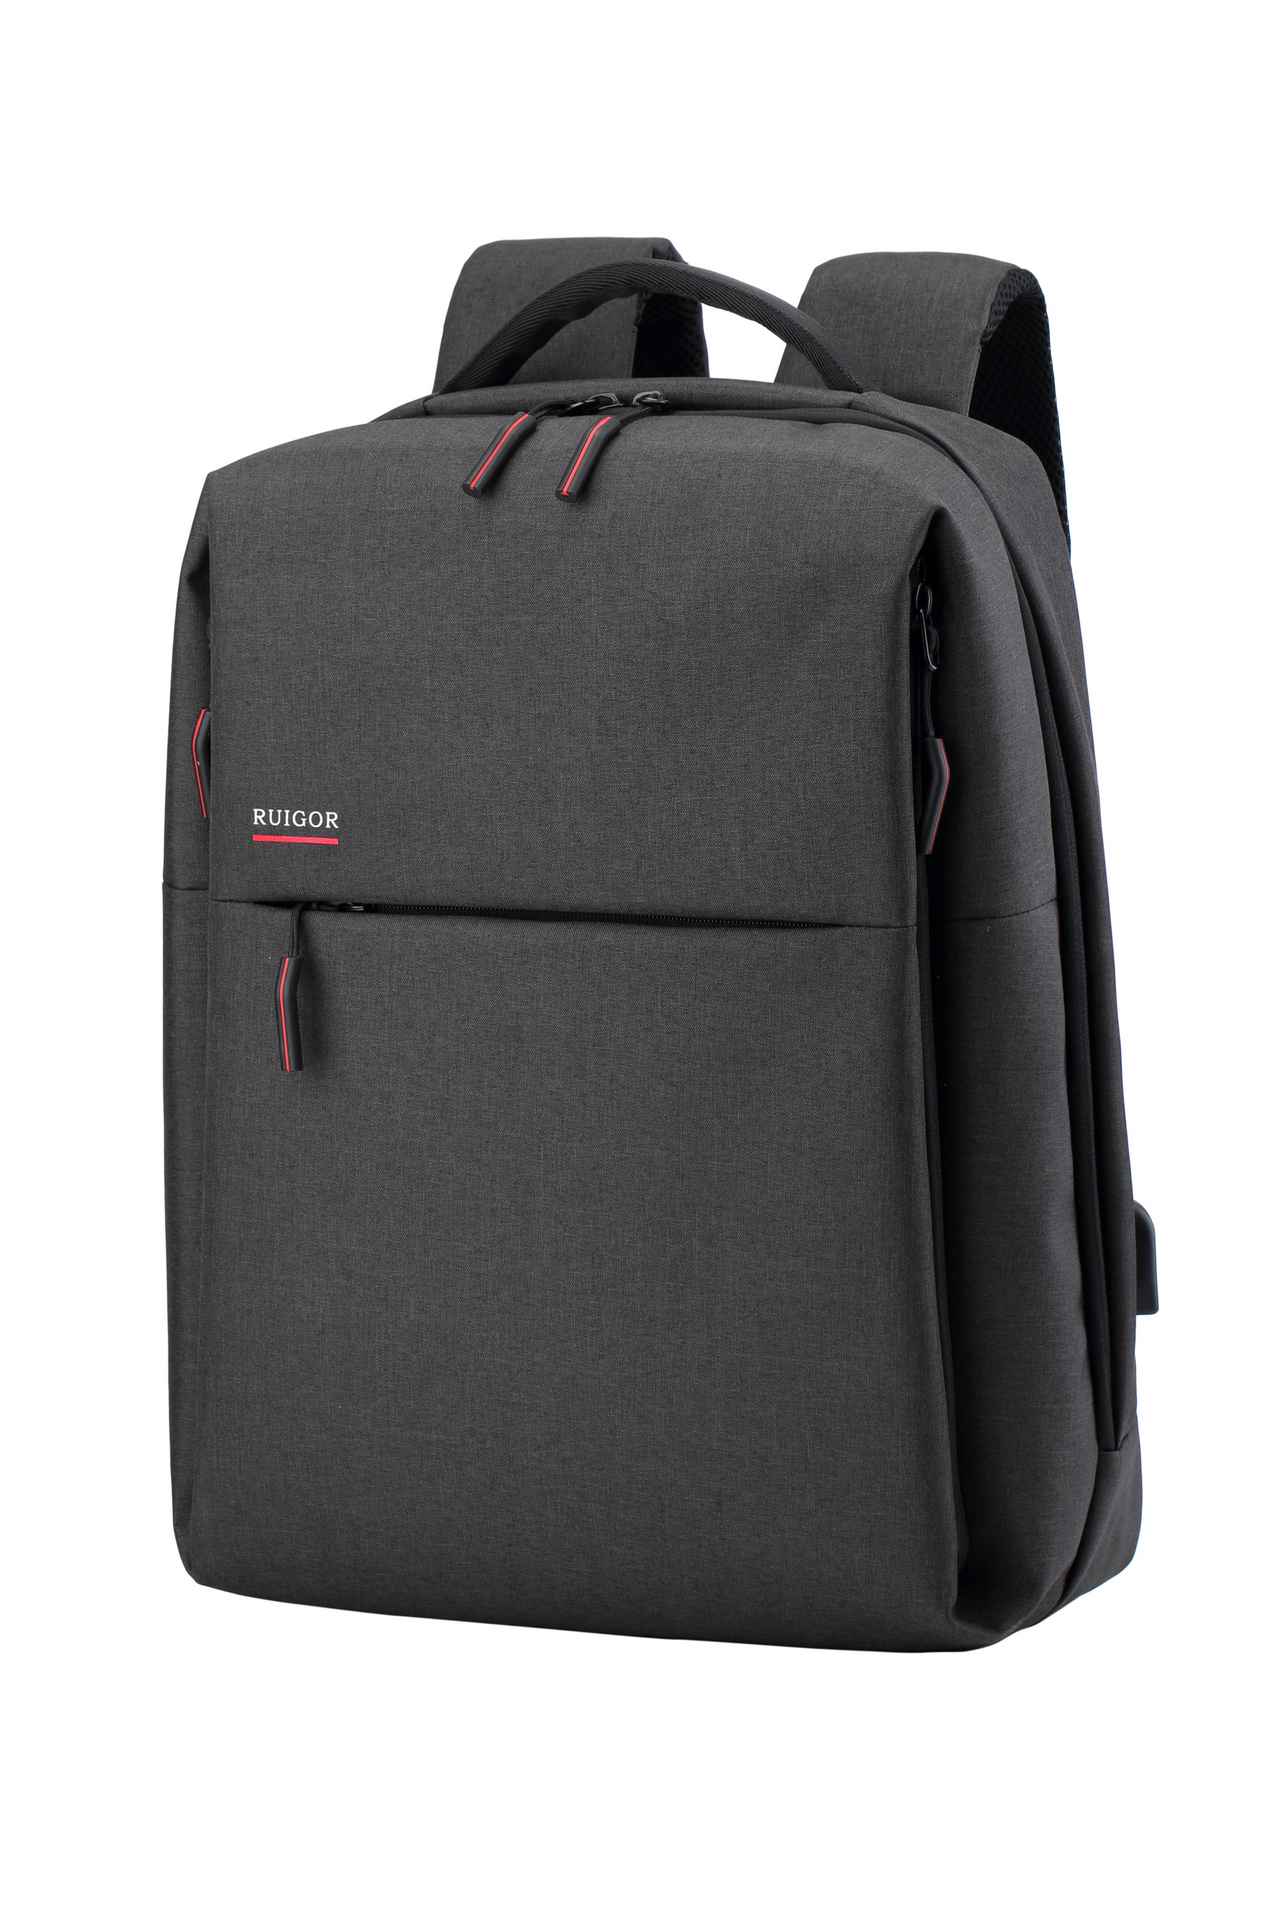 RUIGOR CITY 56 Laptop Backpack Dark Grey